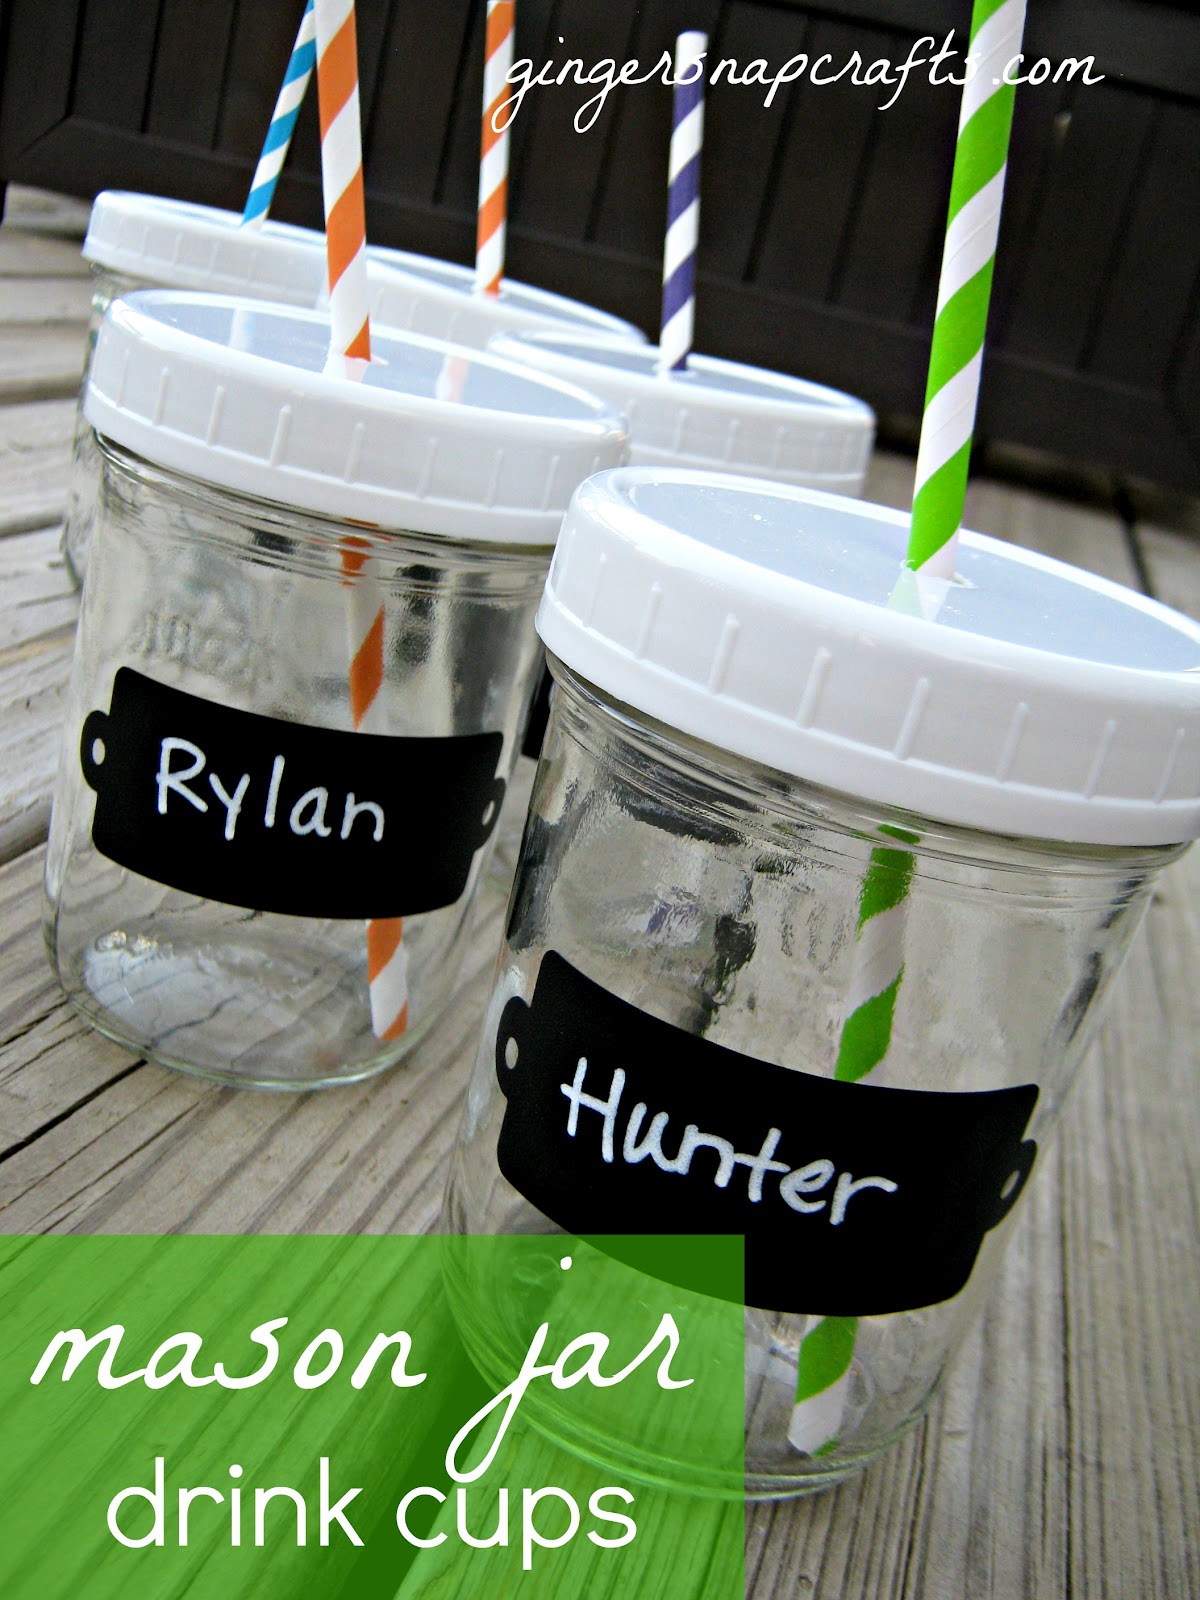 http://4.bp.blogspot.com/-zOAbjCyJV08/UAsF8T8zFQI/AAAAAAAAd7o/EY_XtkCf6c8/s1600/mason+jar+drink+cups+with+lids.jpg